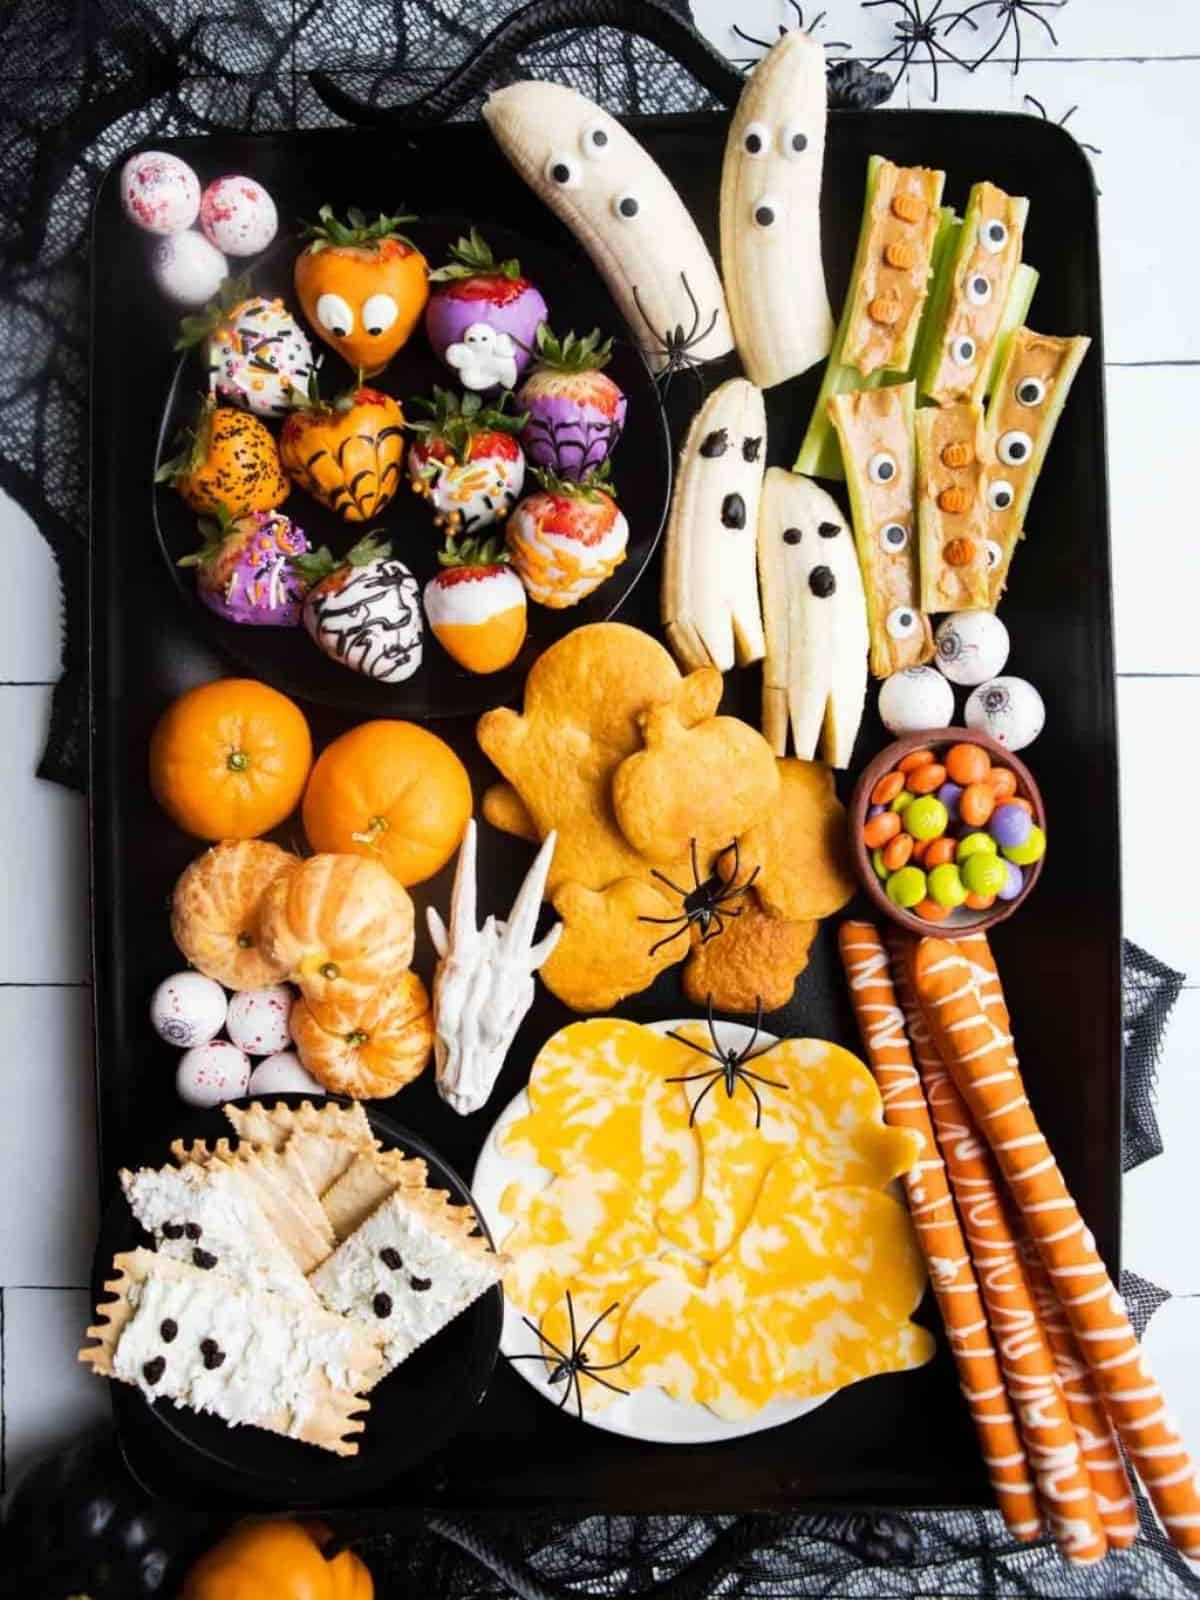 Various Kid-friendly Halloween snacks on a tray.